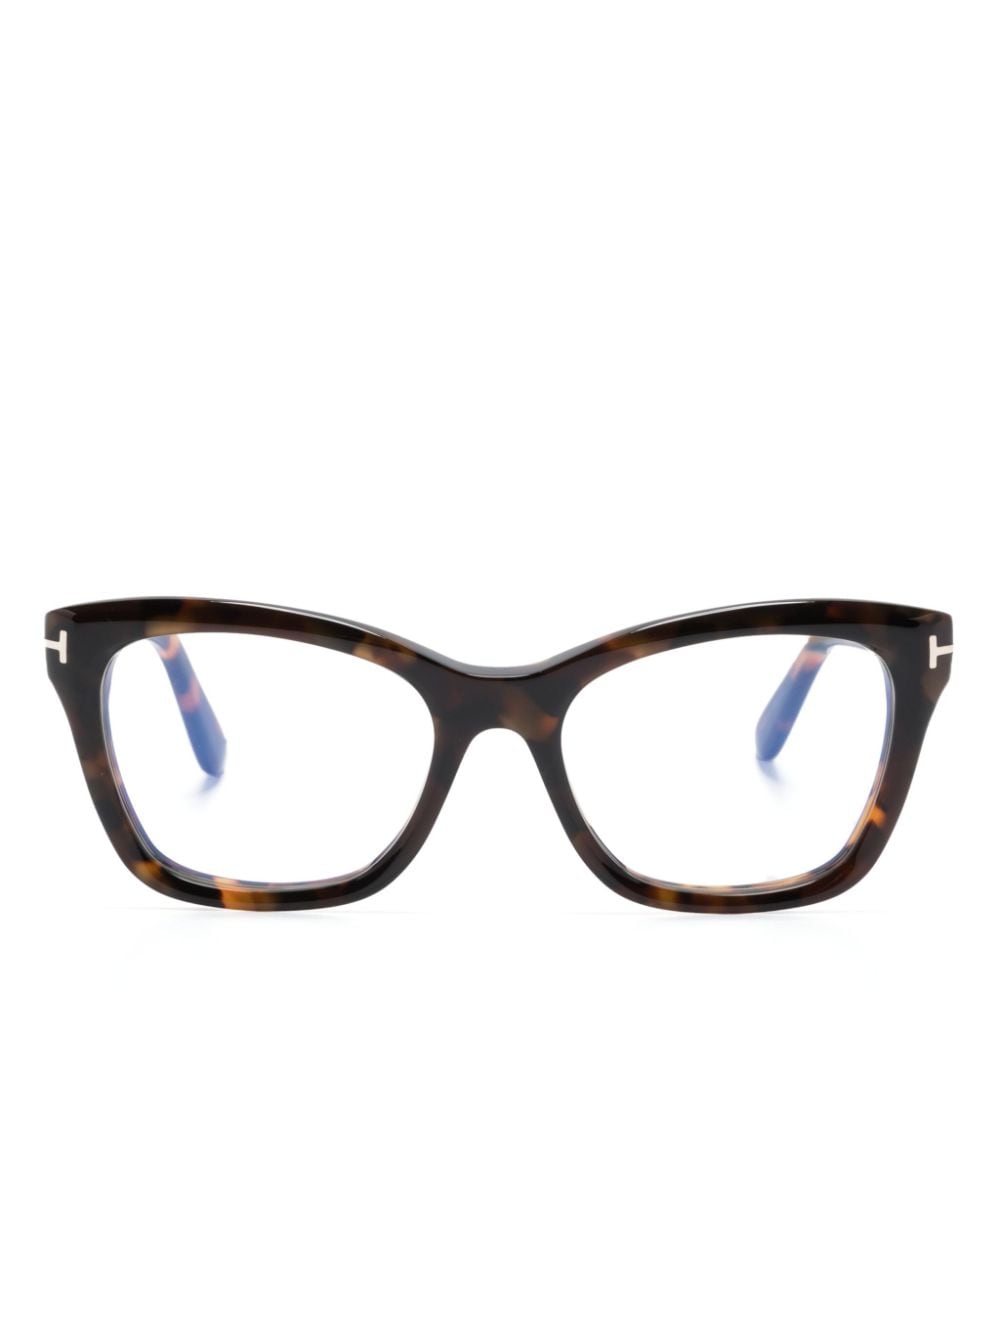 TOM FORD Eyewear Blue Block cat-eyes glasses - Brown von TOM FORD Eyewear